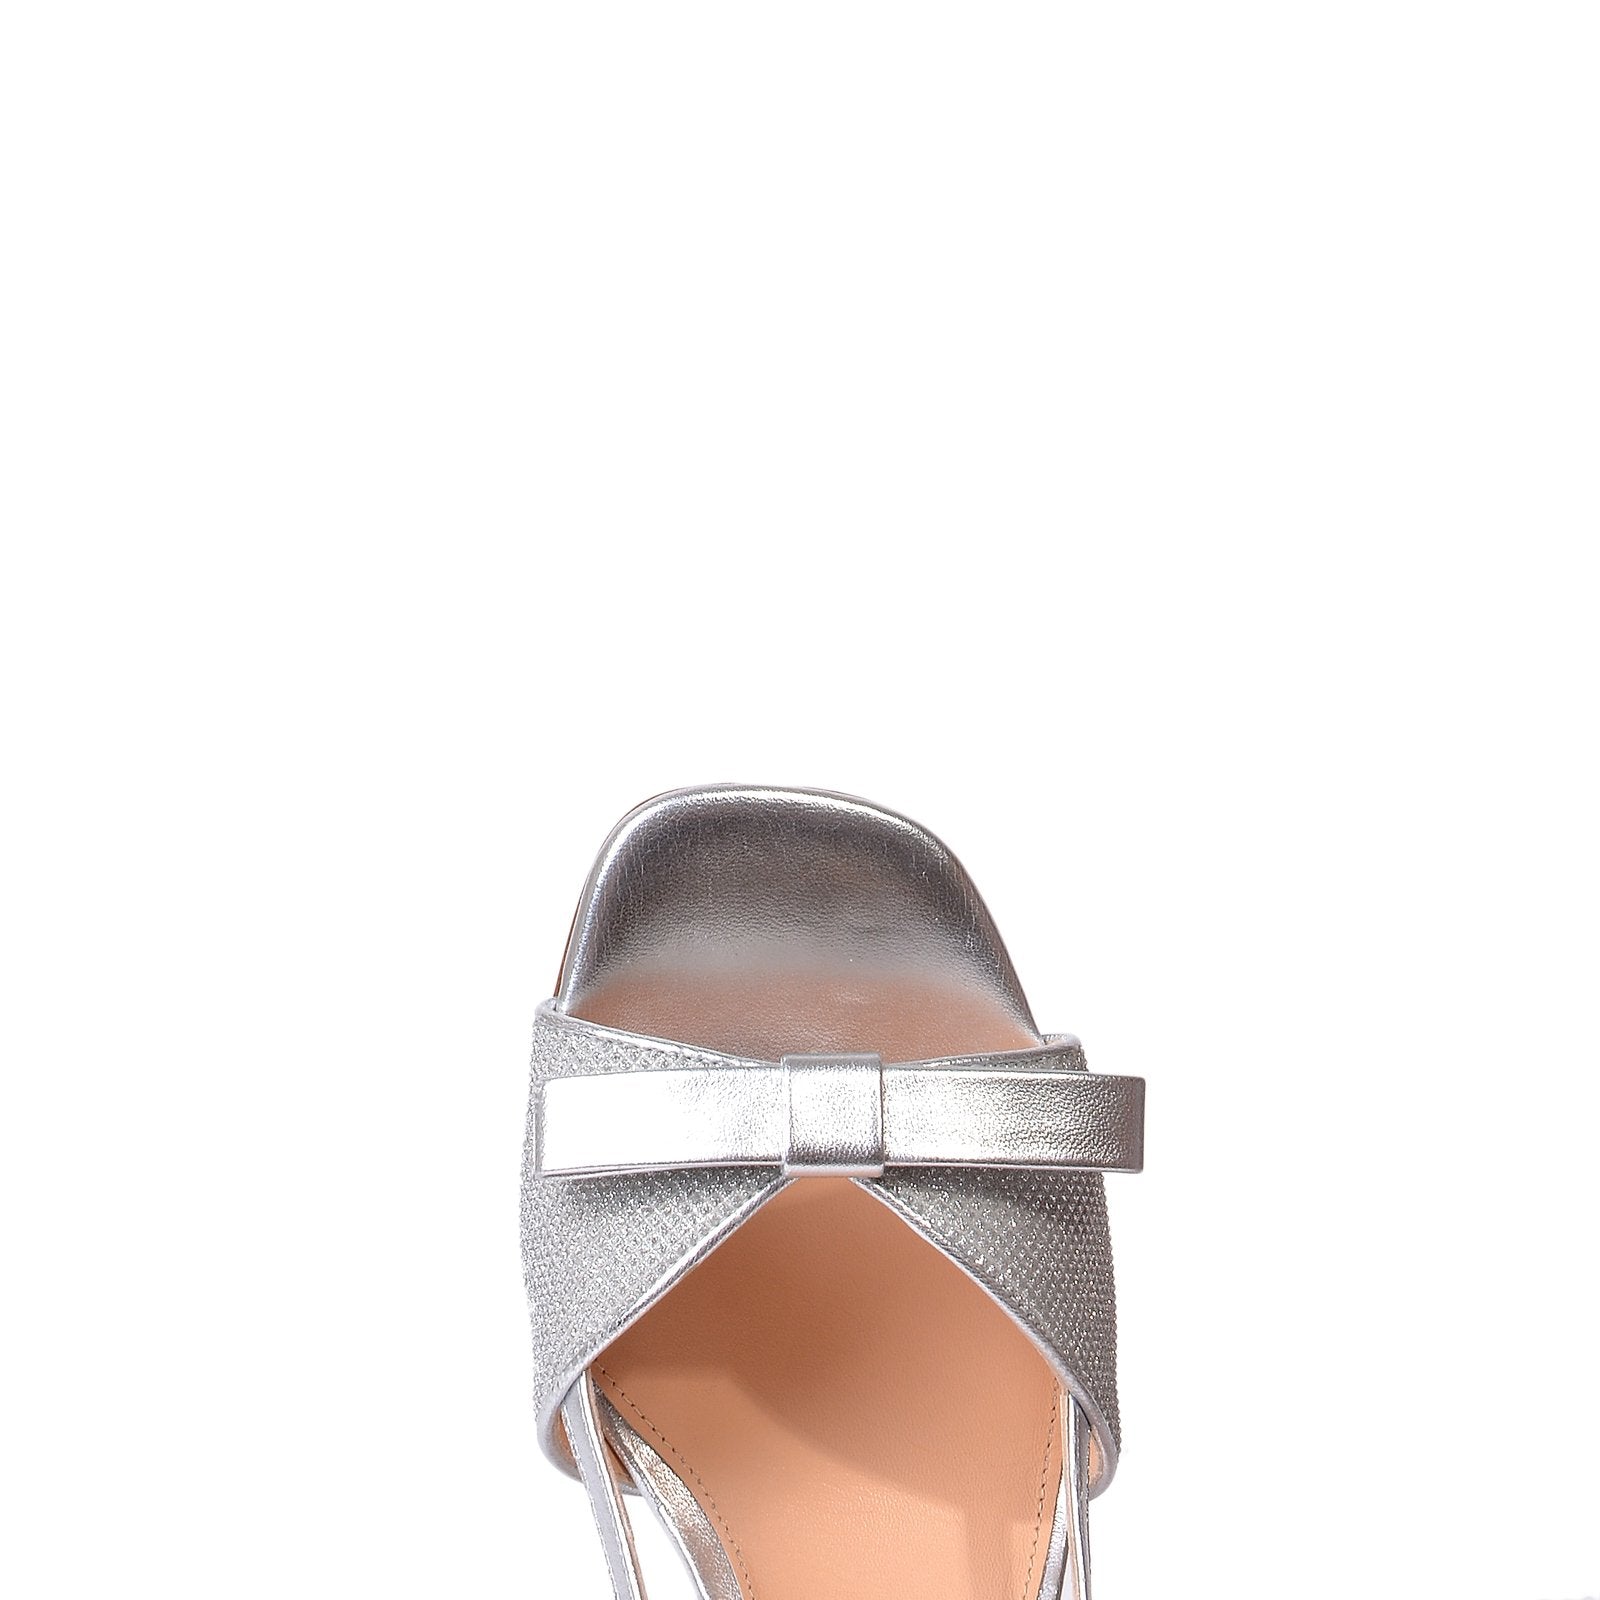 Luxor Bow Glitter Sandals Heels 1103/Silver - 9